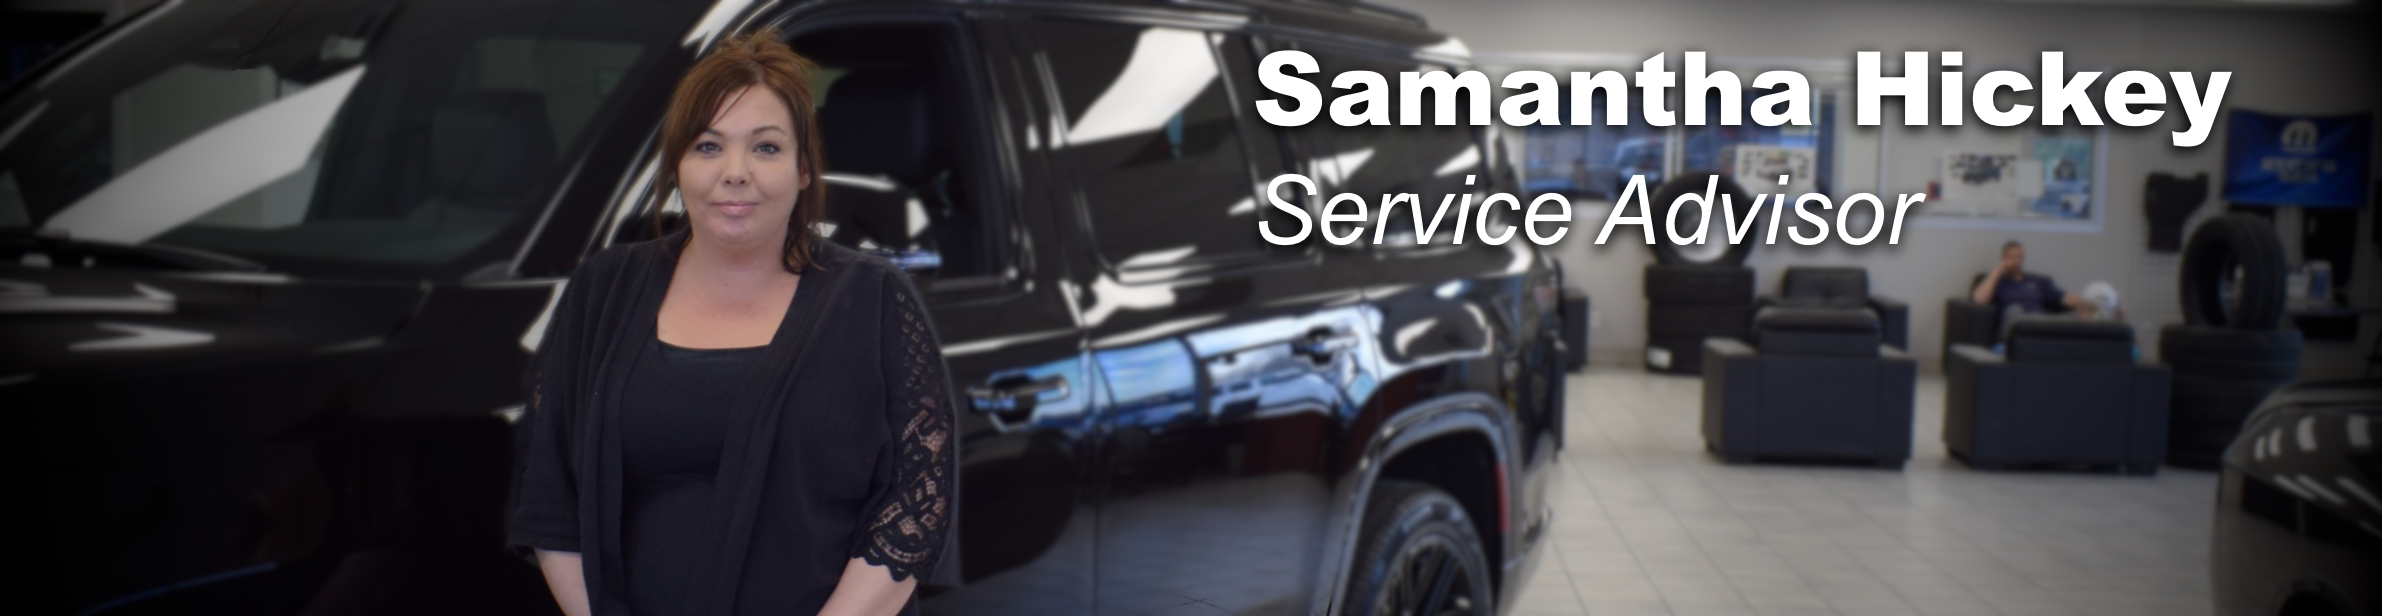 samantha hickey service advisor prestige chrysler dodge jeep ram